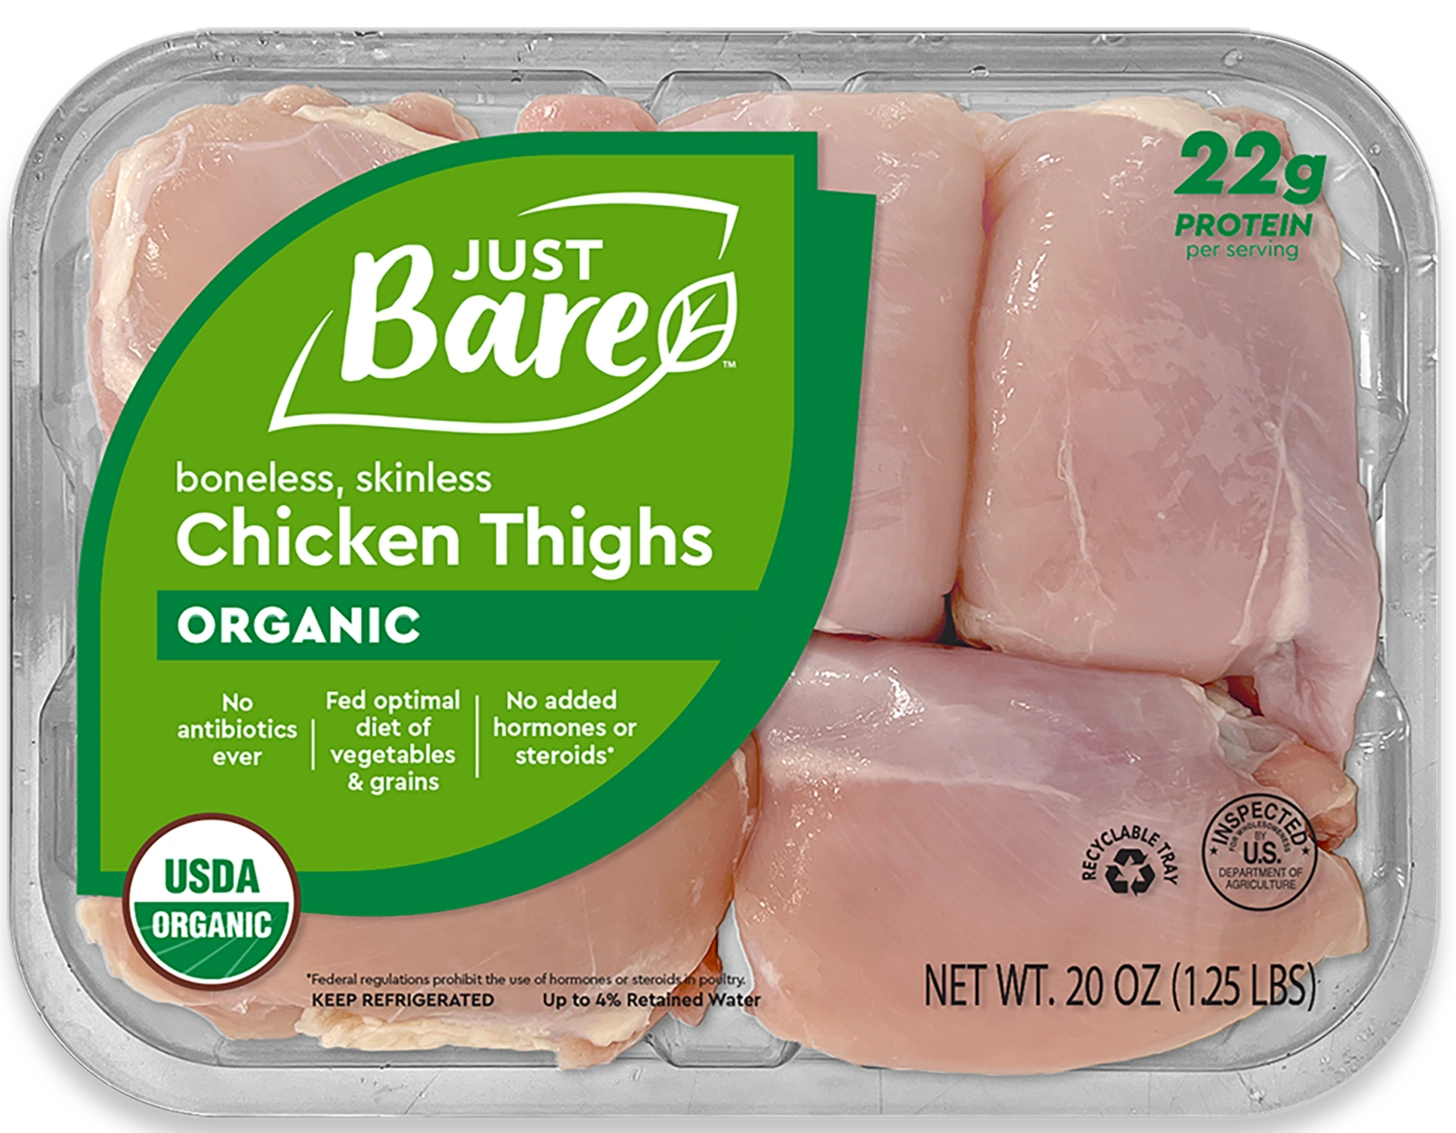 USDA Organic Whole Chicken - Skinless